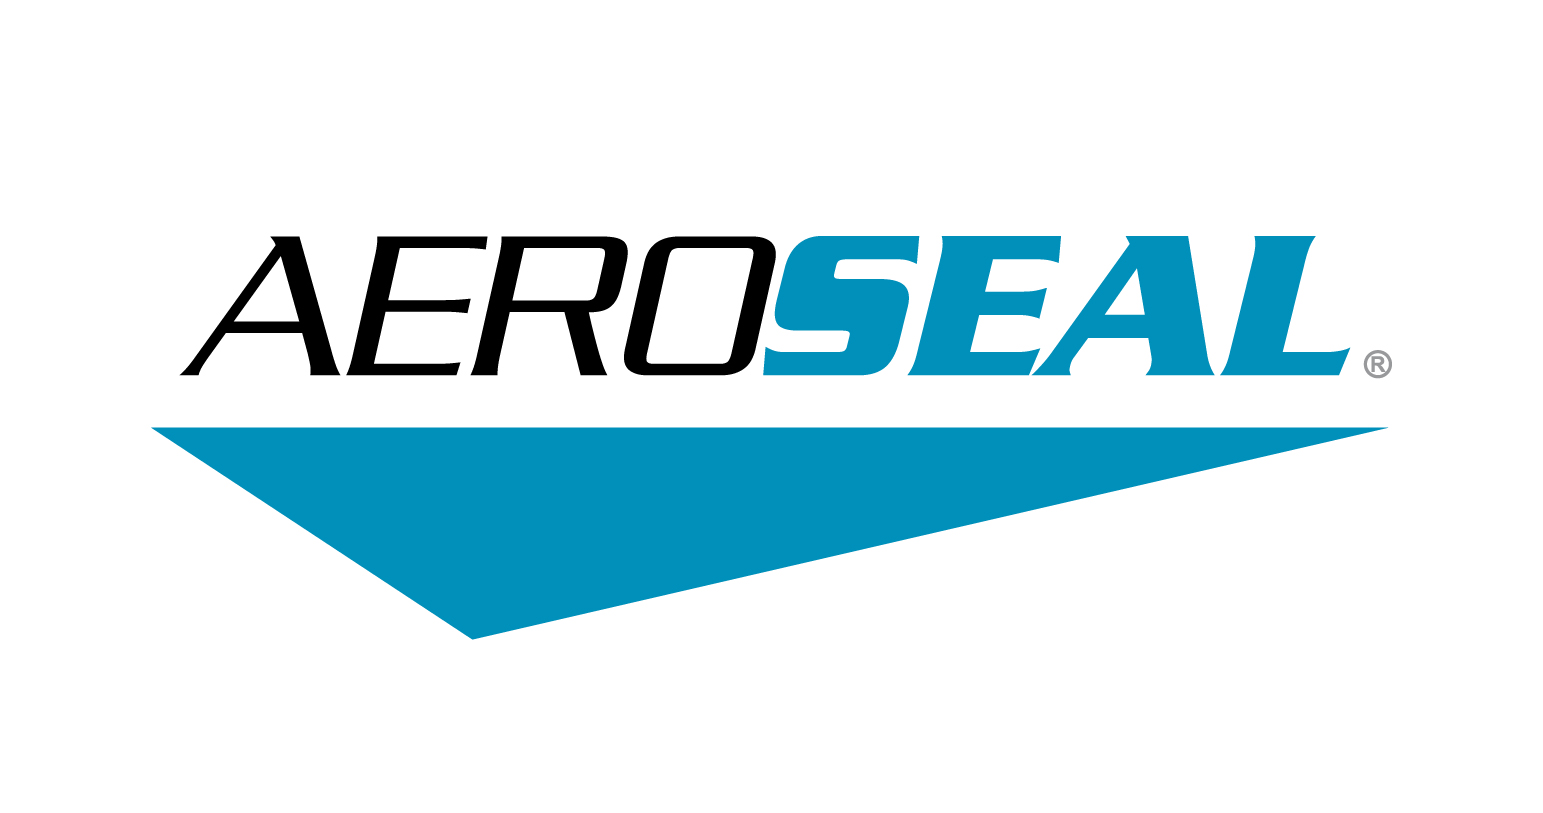 Aeroseal color logo